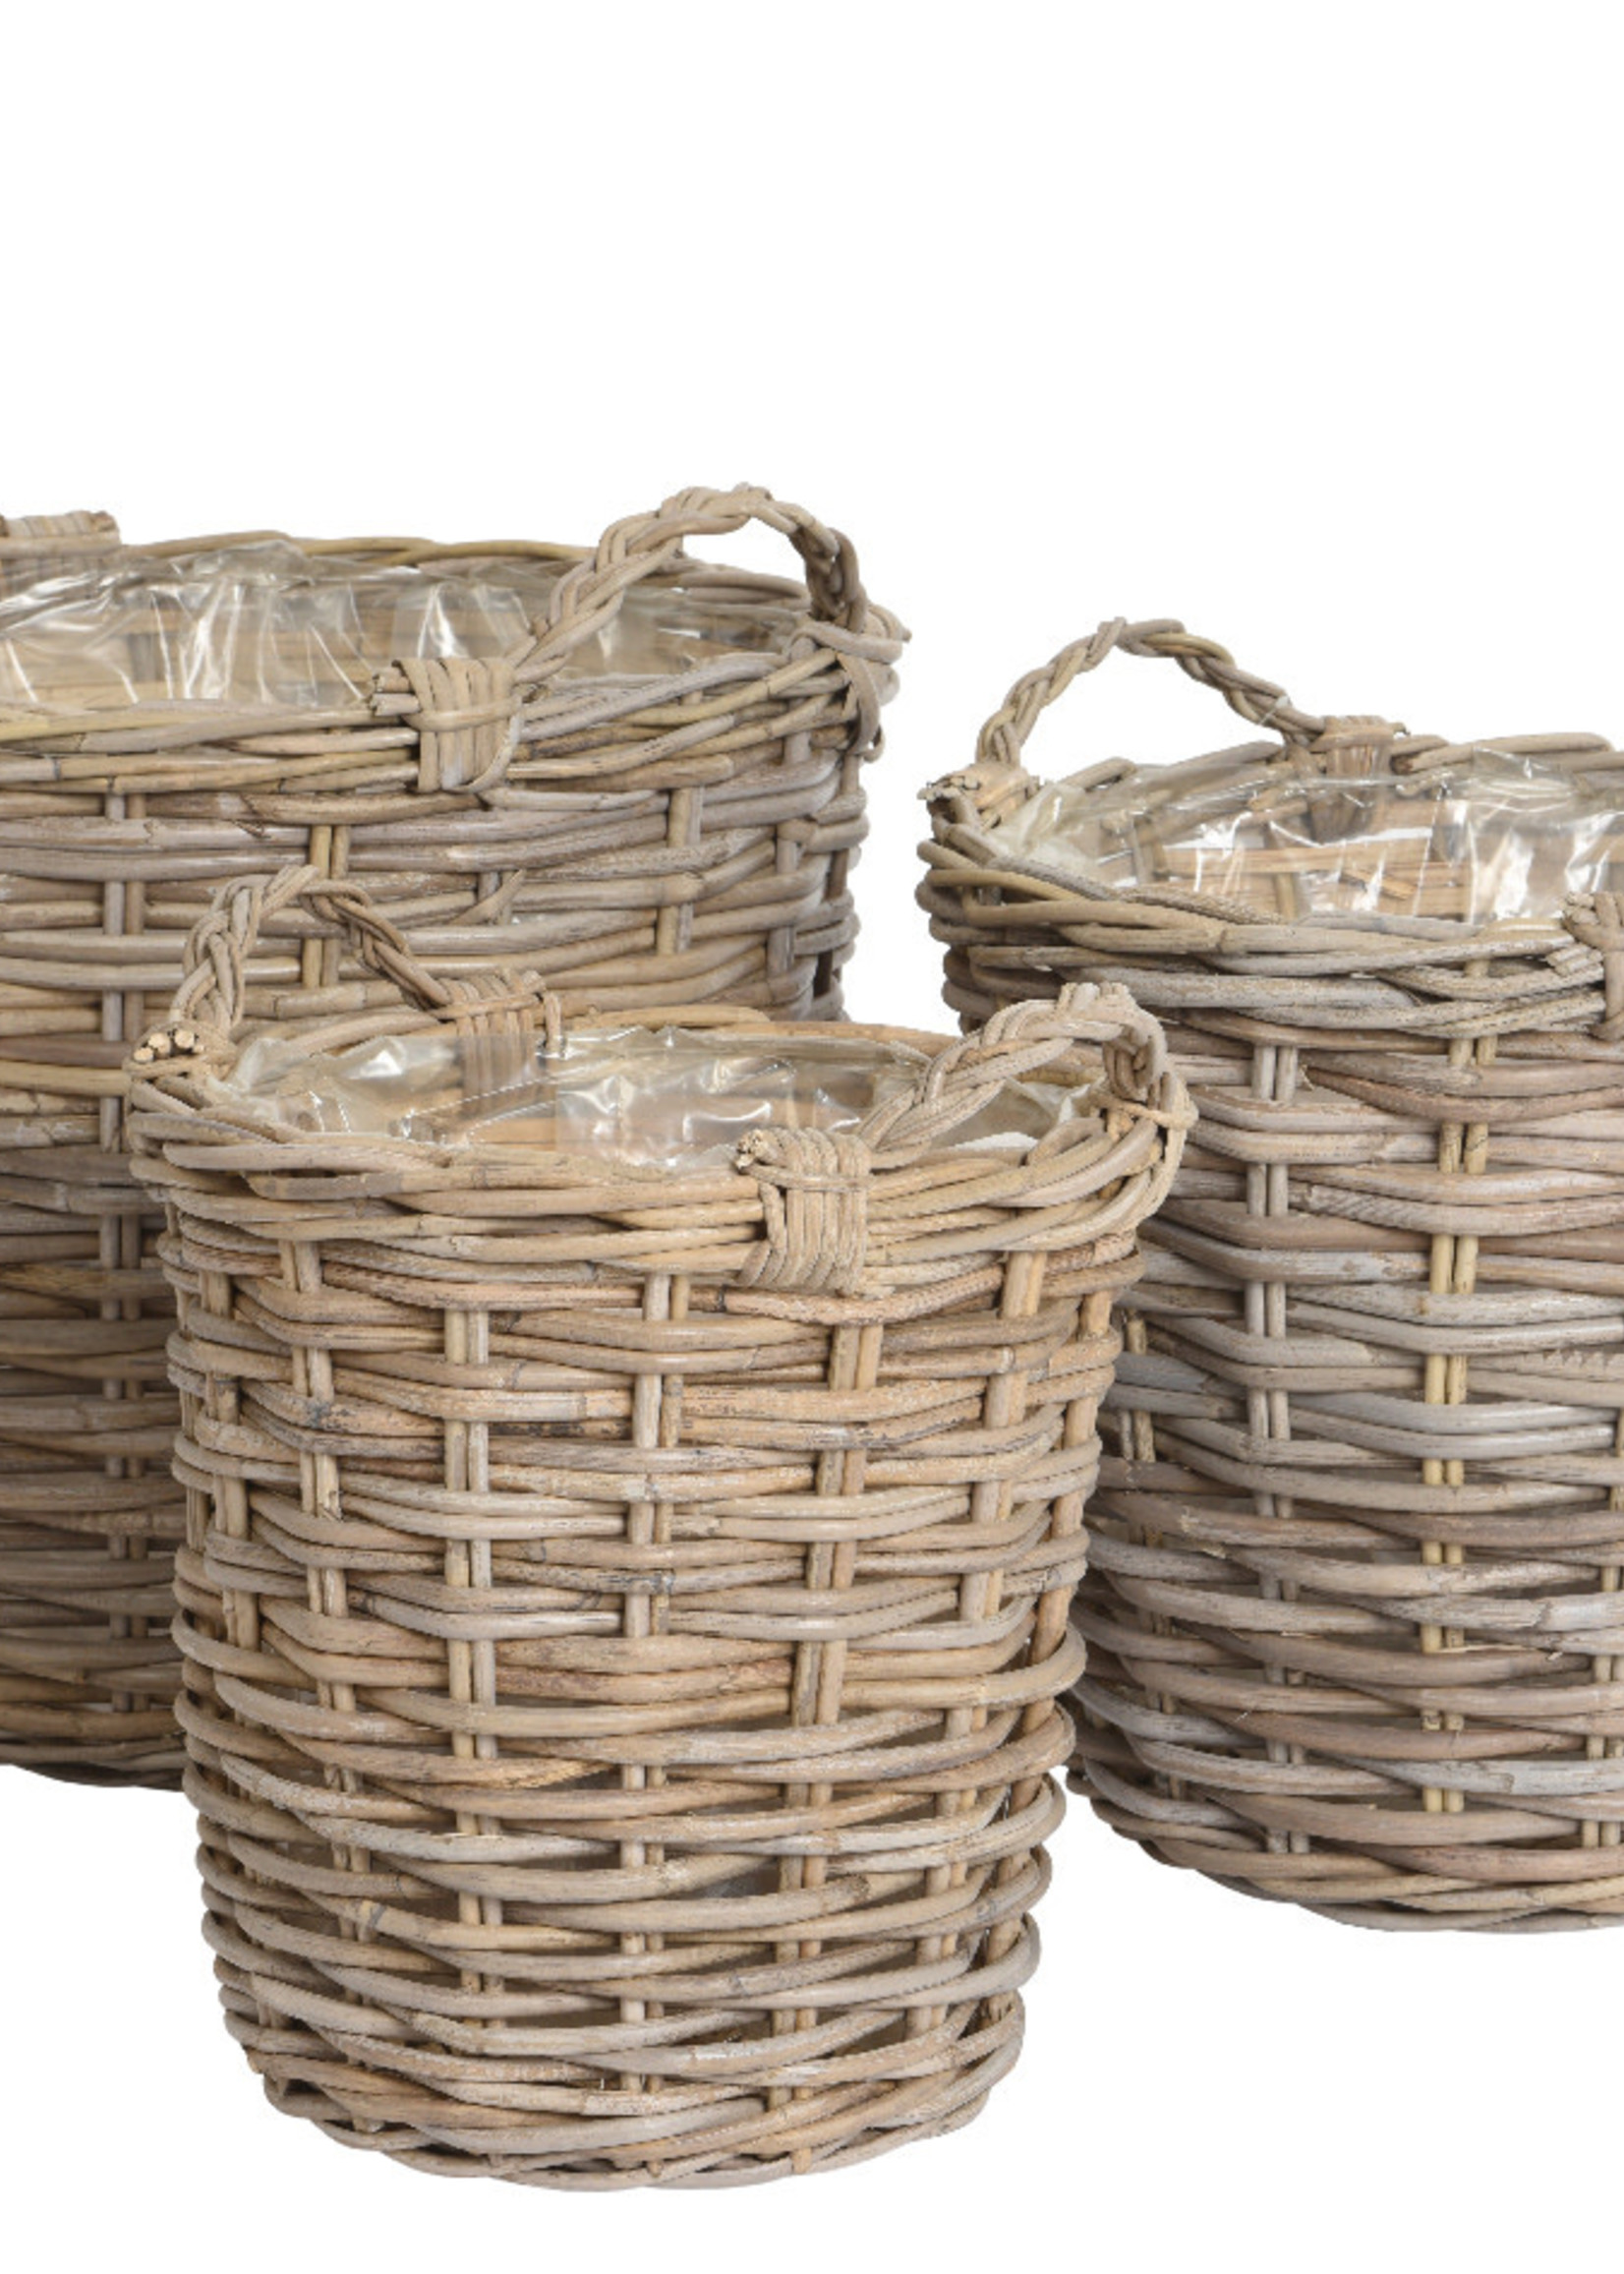 Kaemingk Large Rattan Grey Basket Plastic Lining 57cmx45cm - one basket only